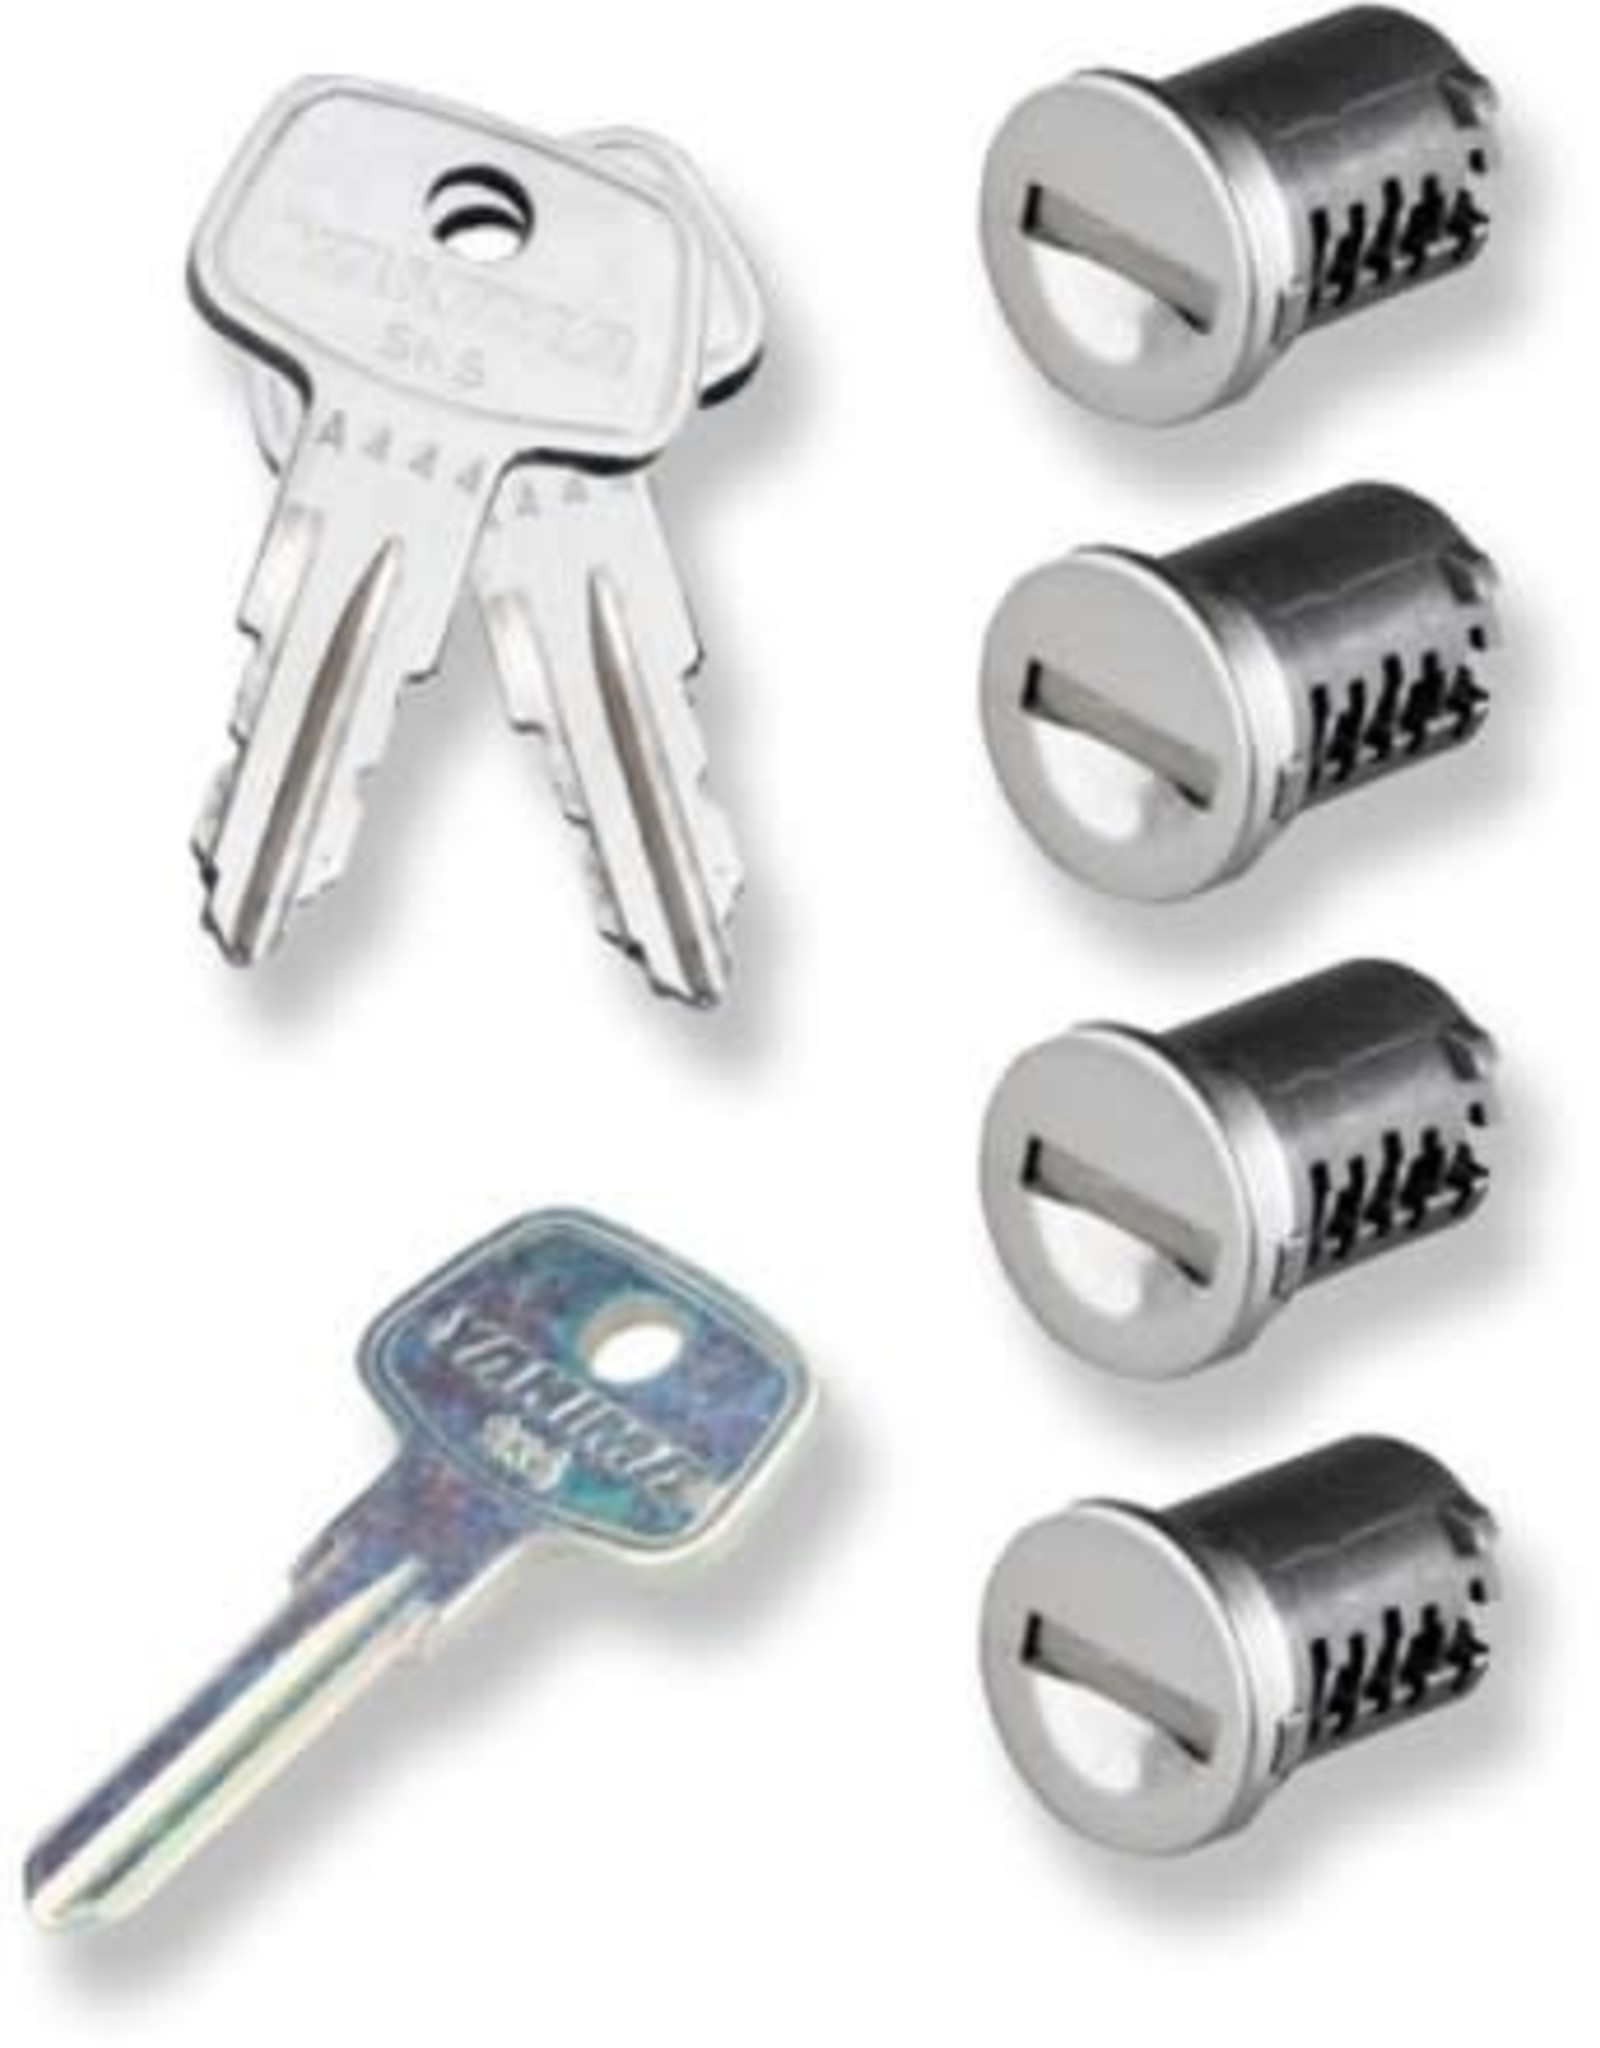 Yakima SKS Lock Core with Key: 4-Pack